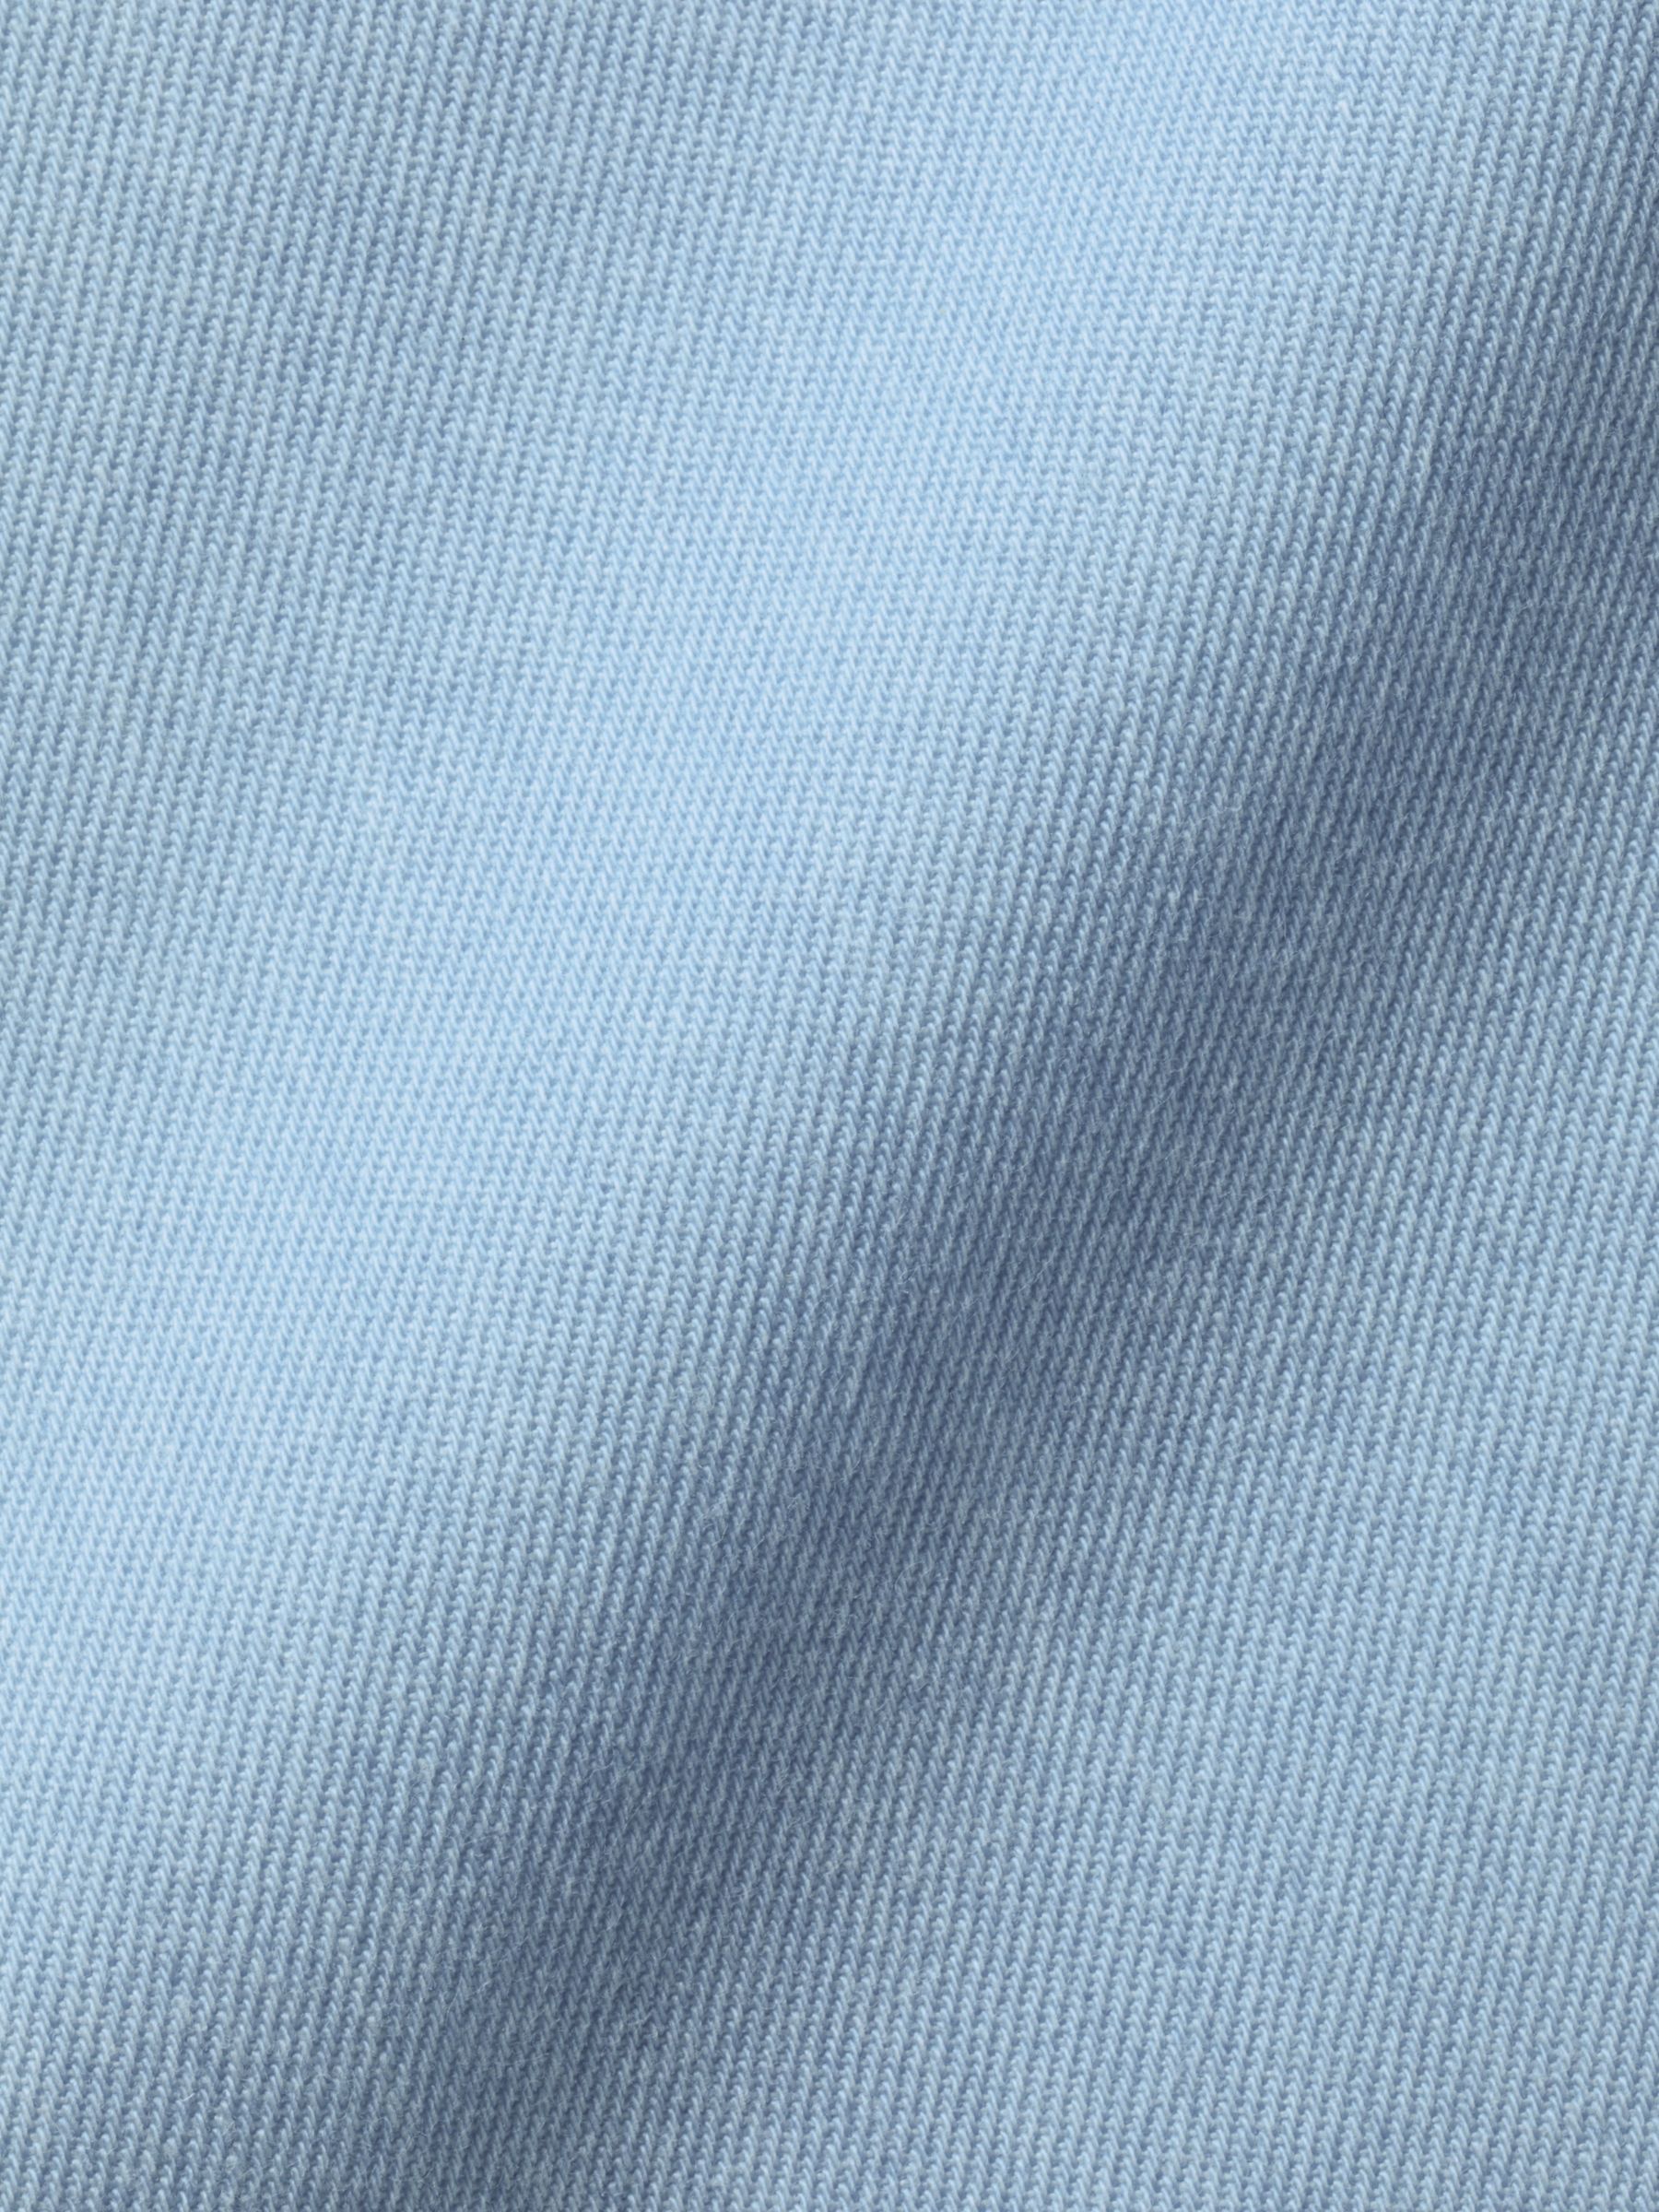 Charles Tyrwhitt Slim Fit Denim Shirt, Light Blue at John Lewis & Partners